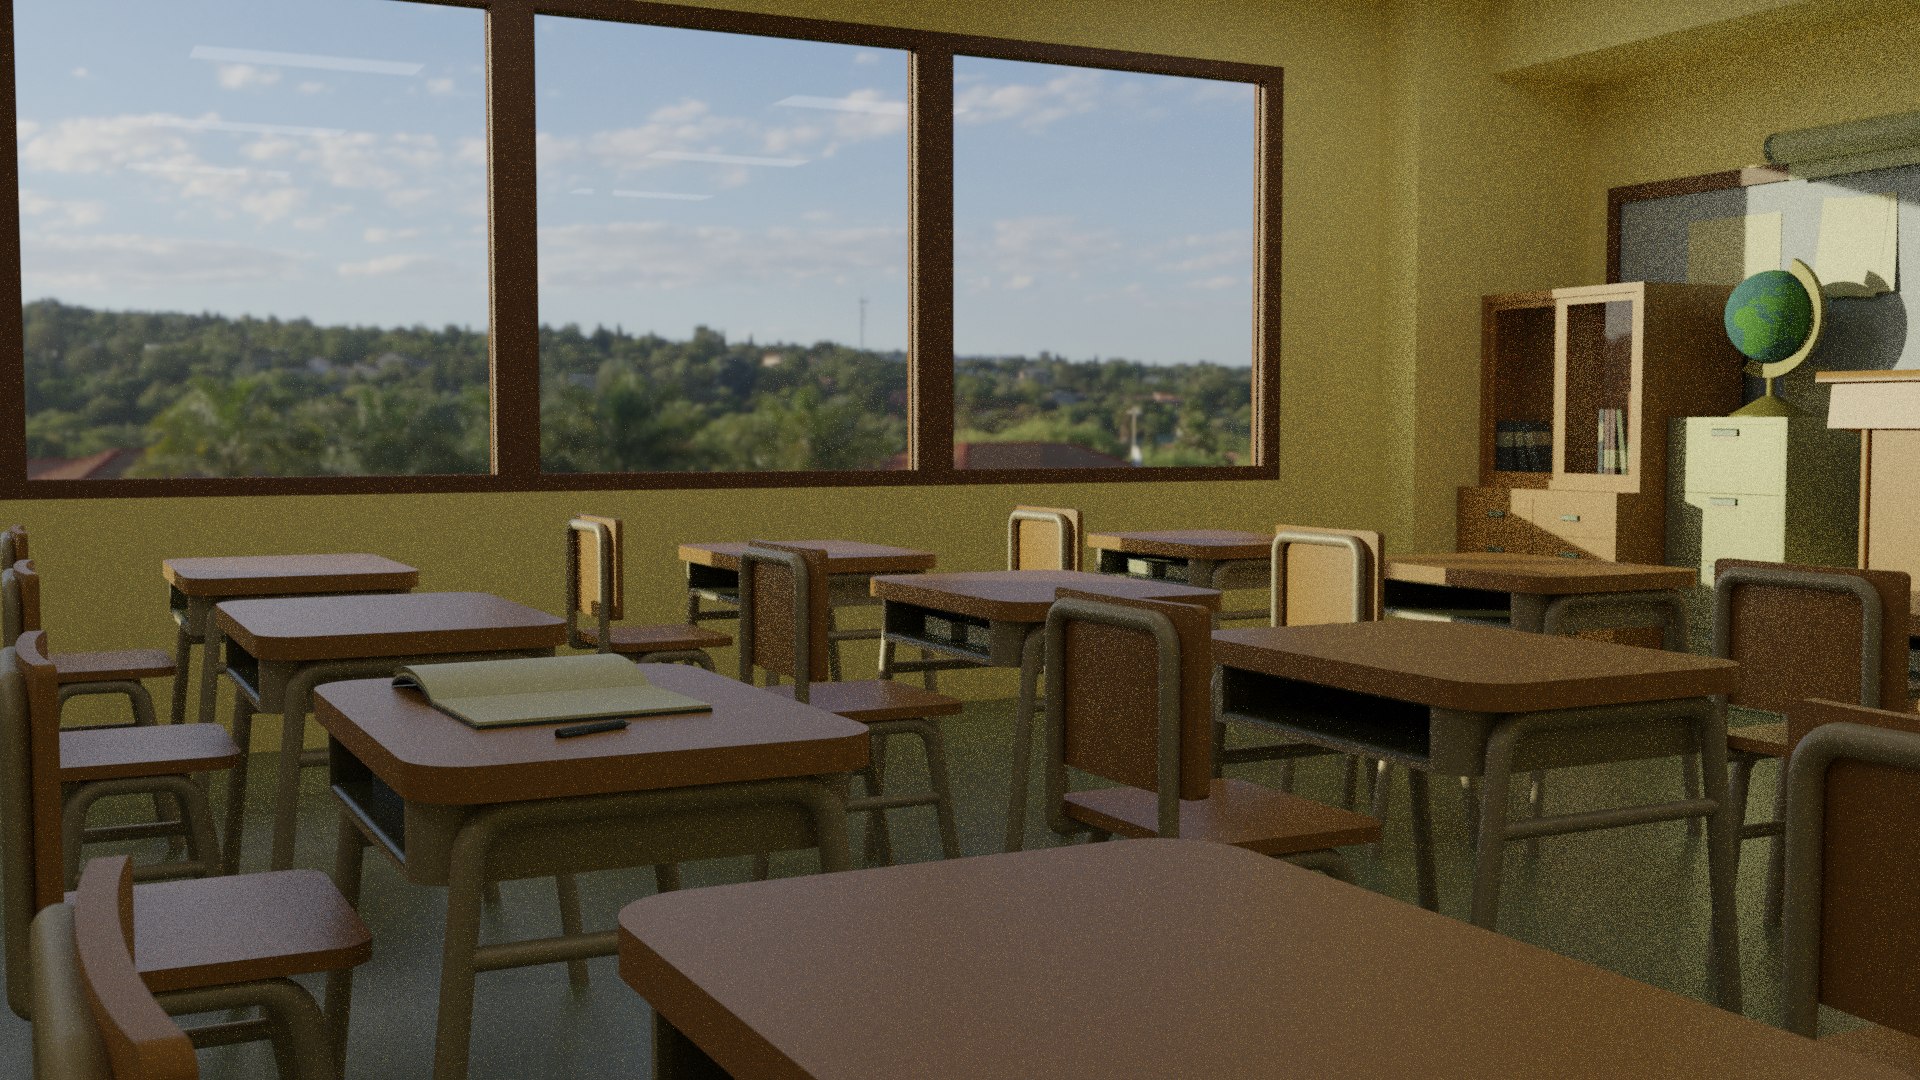 Anime Classroom - Buy Royalty Free 3D model by BigMiniGeek (@BigMiniGeek)  [1375eb3]